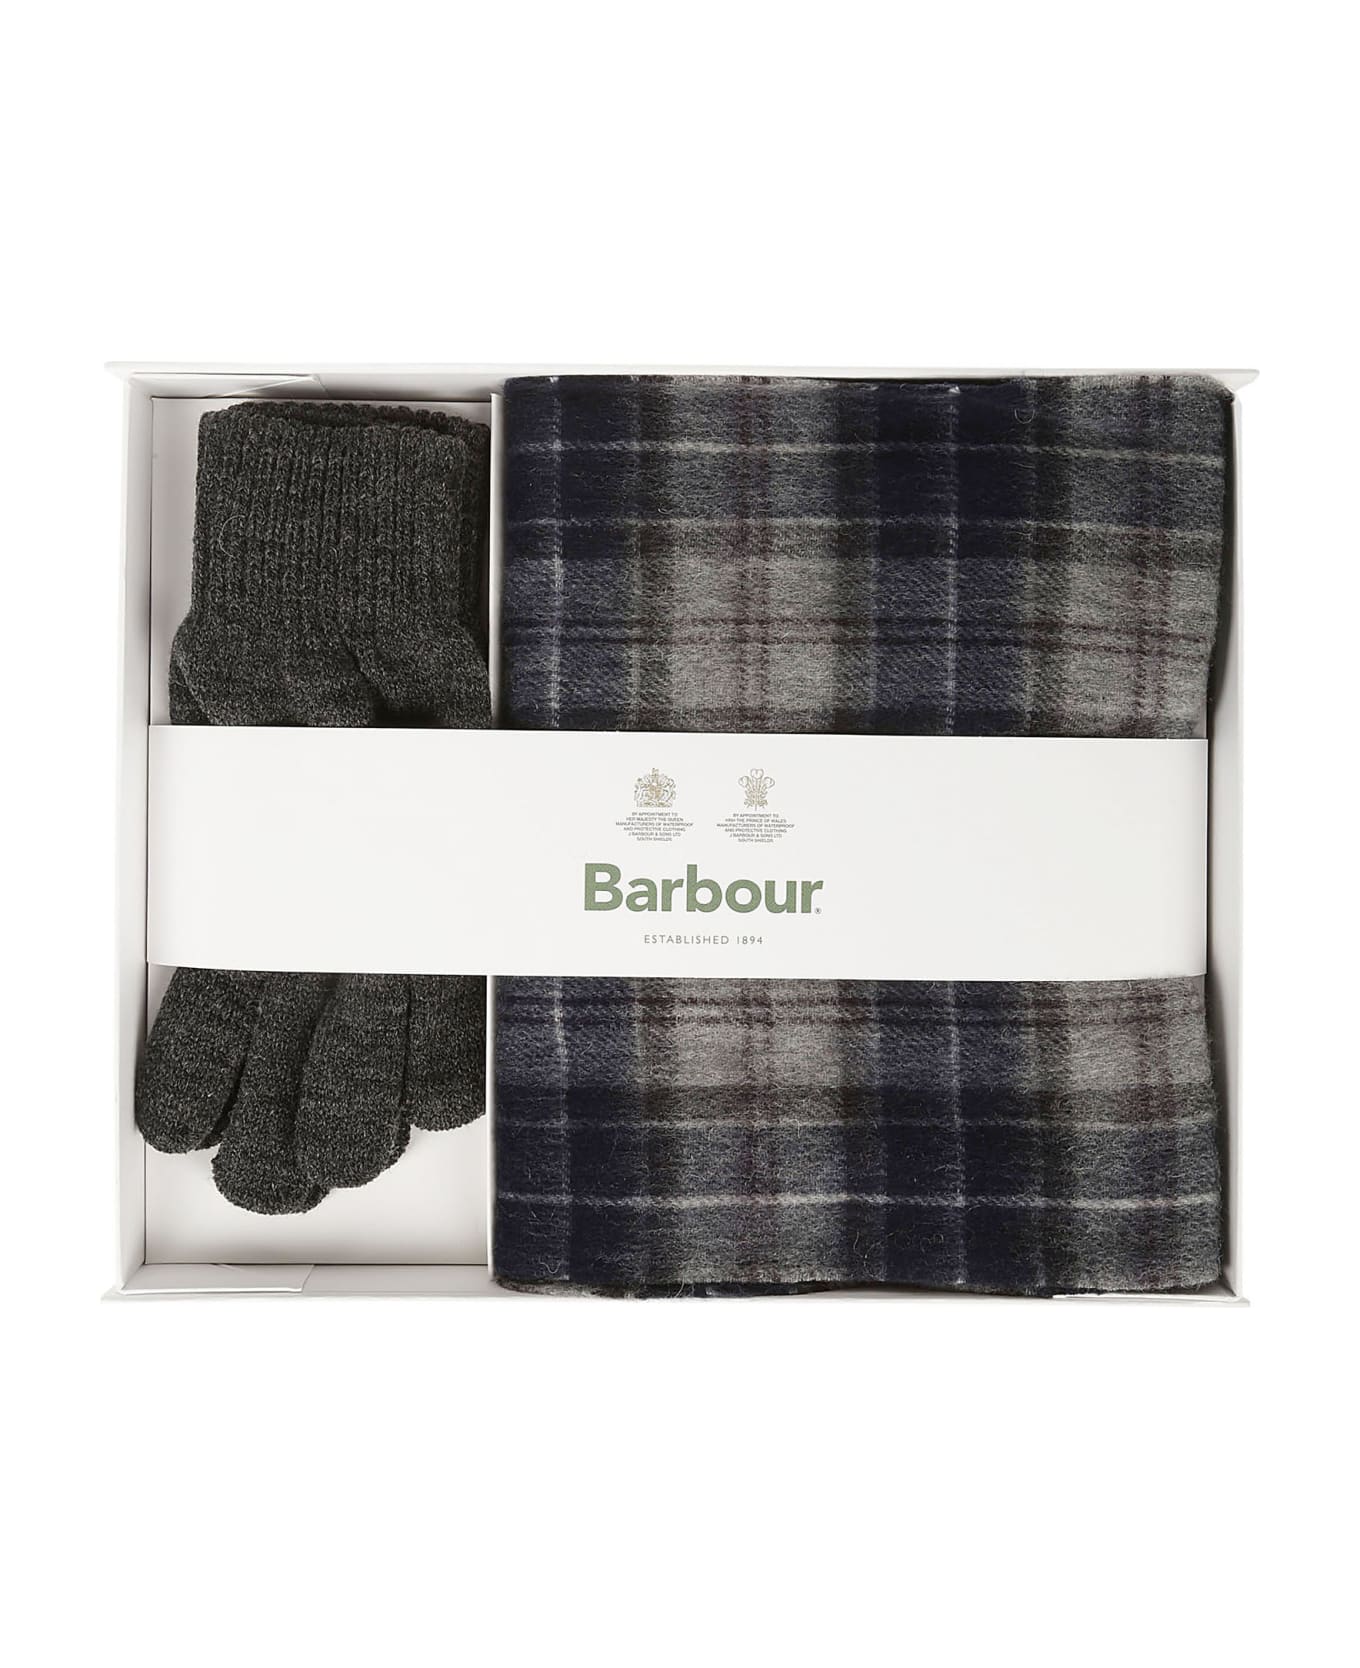 Barbour Tartan Scarf Glove Gift Set - Black Slate Tartan スカーフ